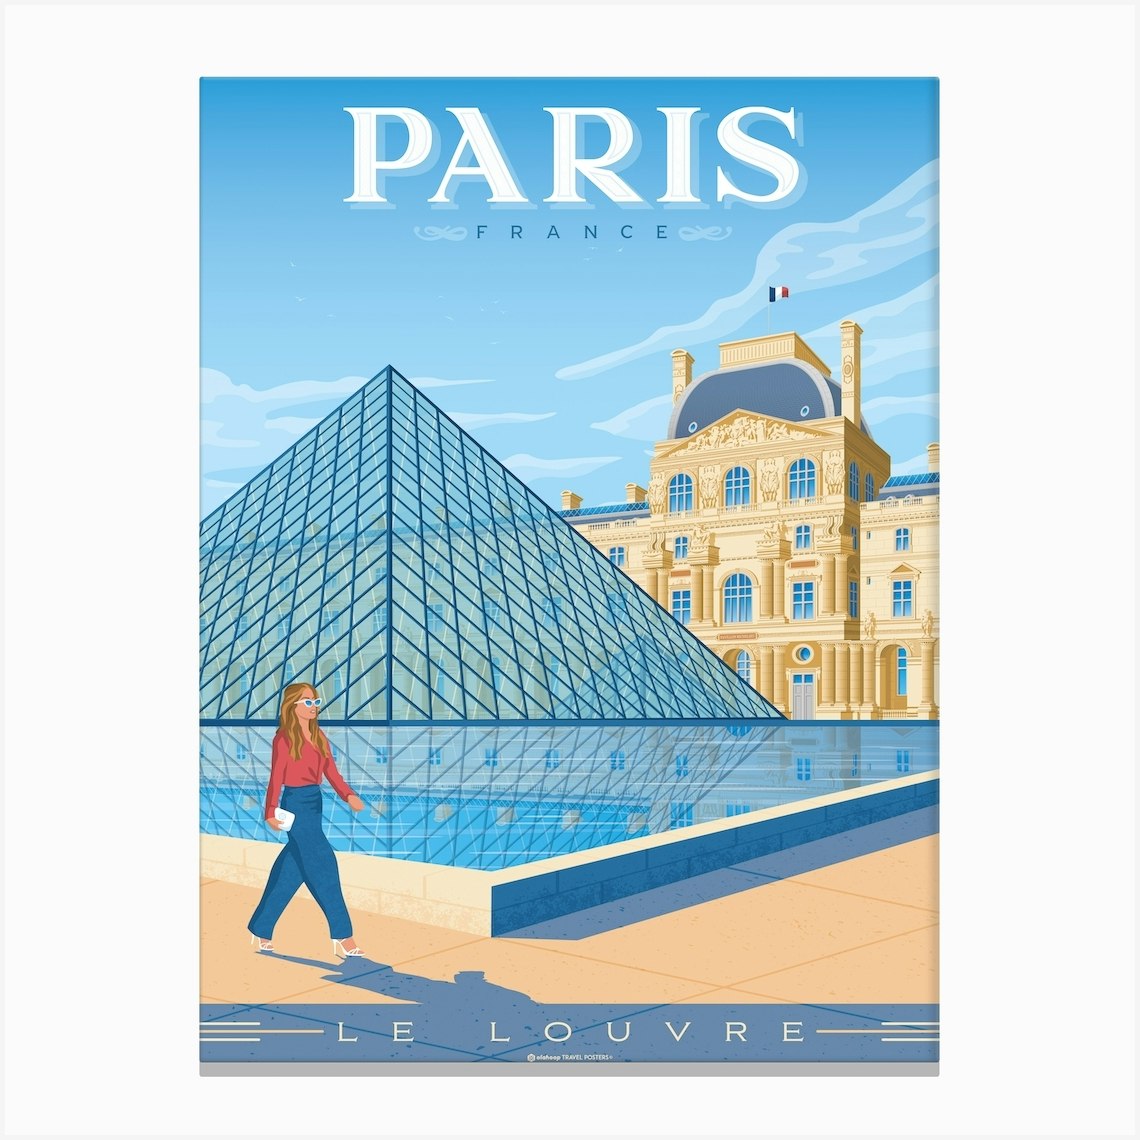 Paris France Le Louvre Museum Pyramids Canvas Print by Olahoop Travel  Posters - Fy